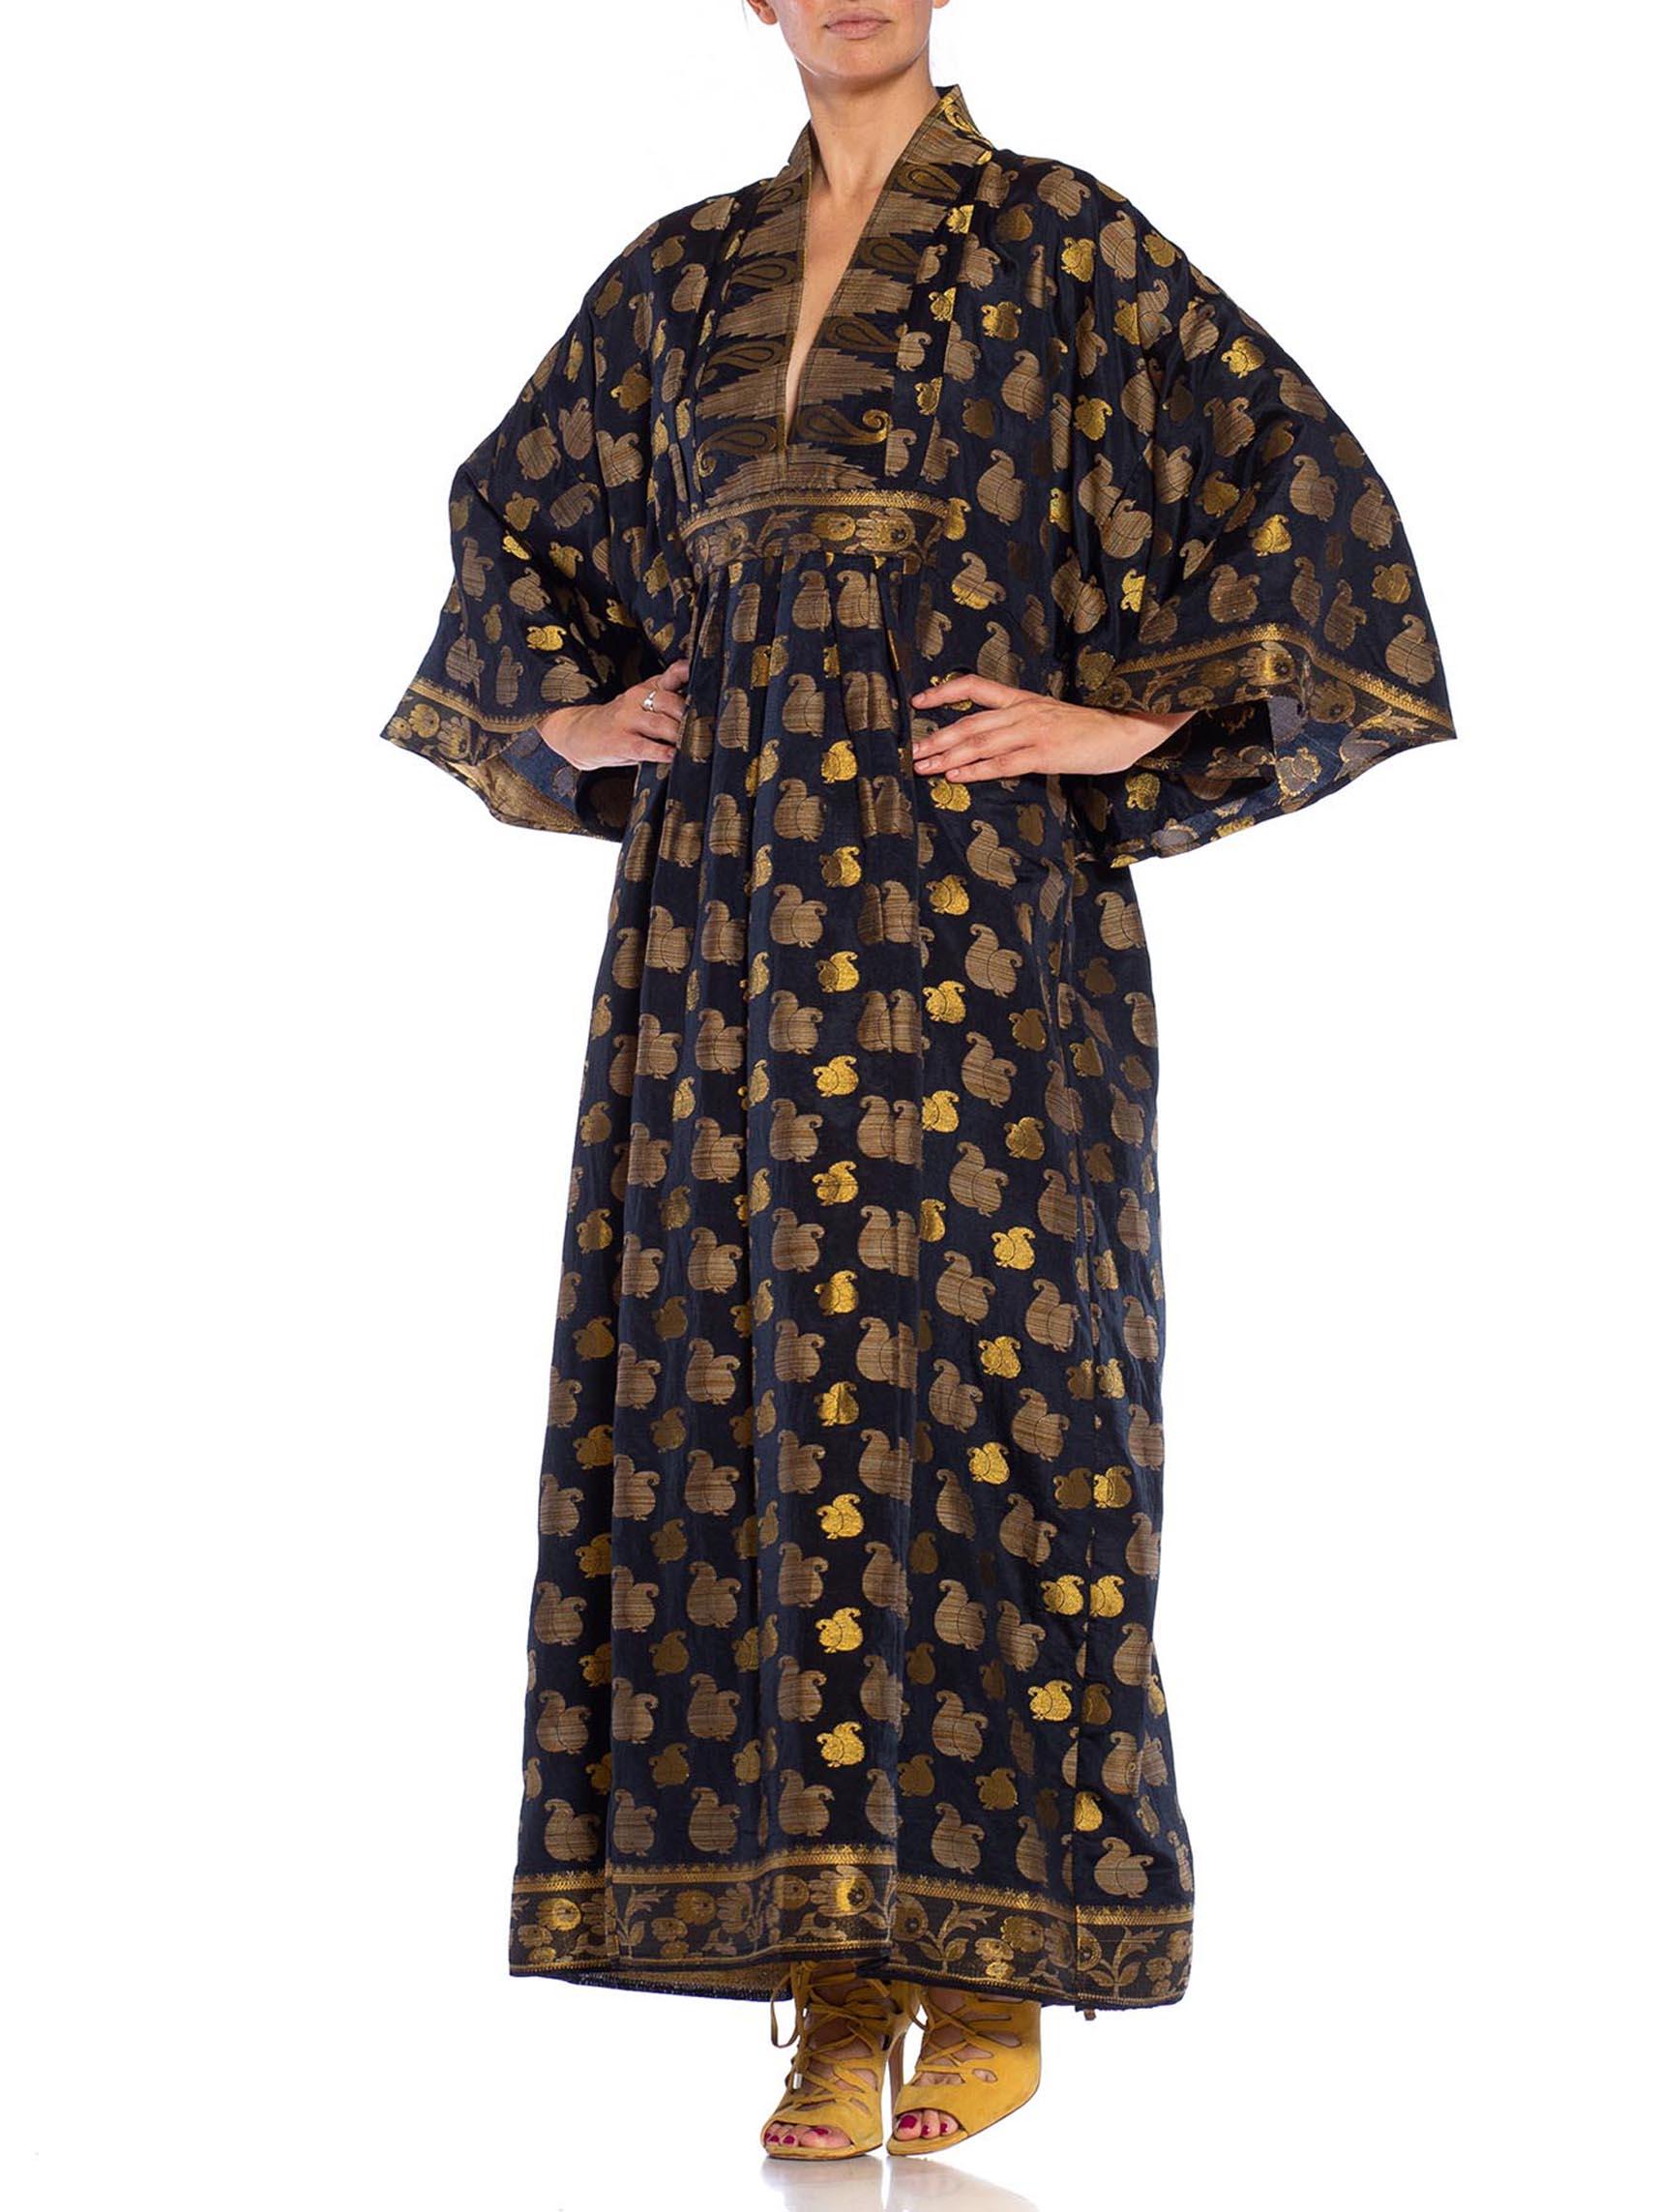 Women's MORPHEW COLLECTION Black & Gold Metallic Silk Kaftan Made From Vintage Saris For Sale